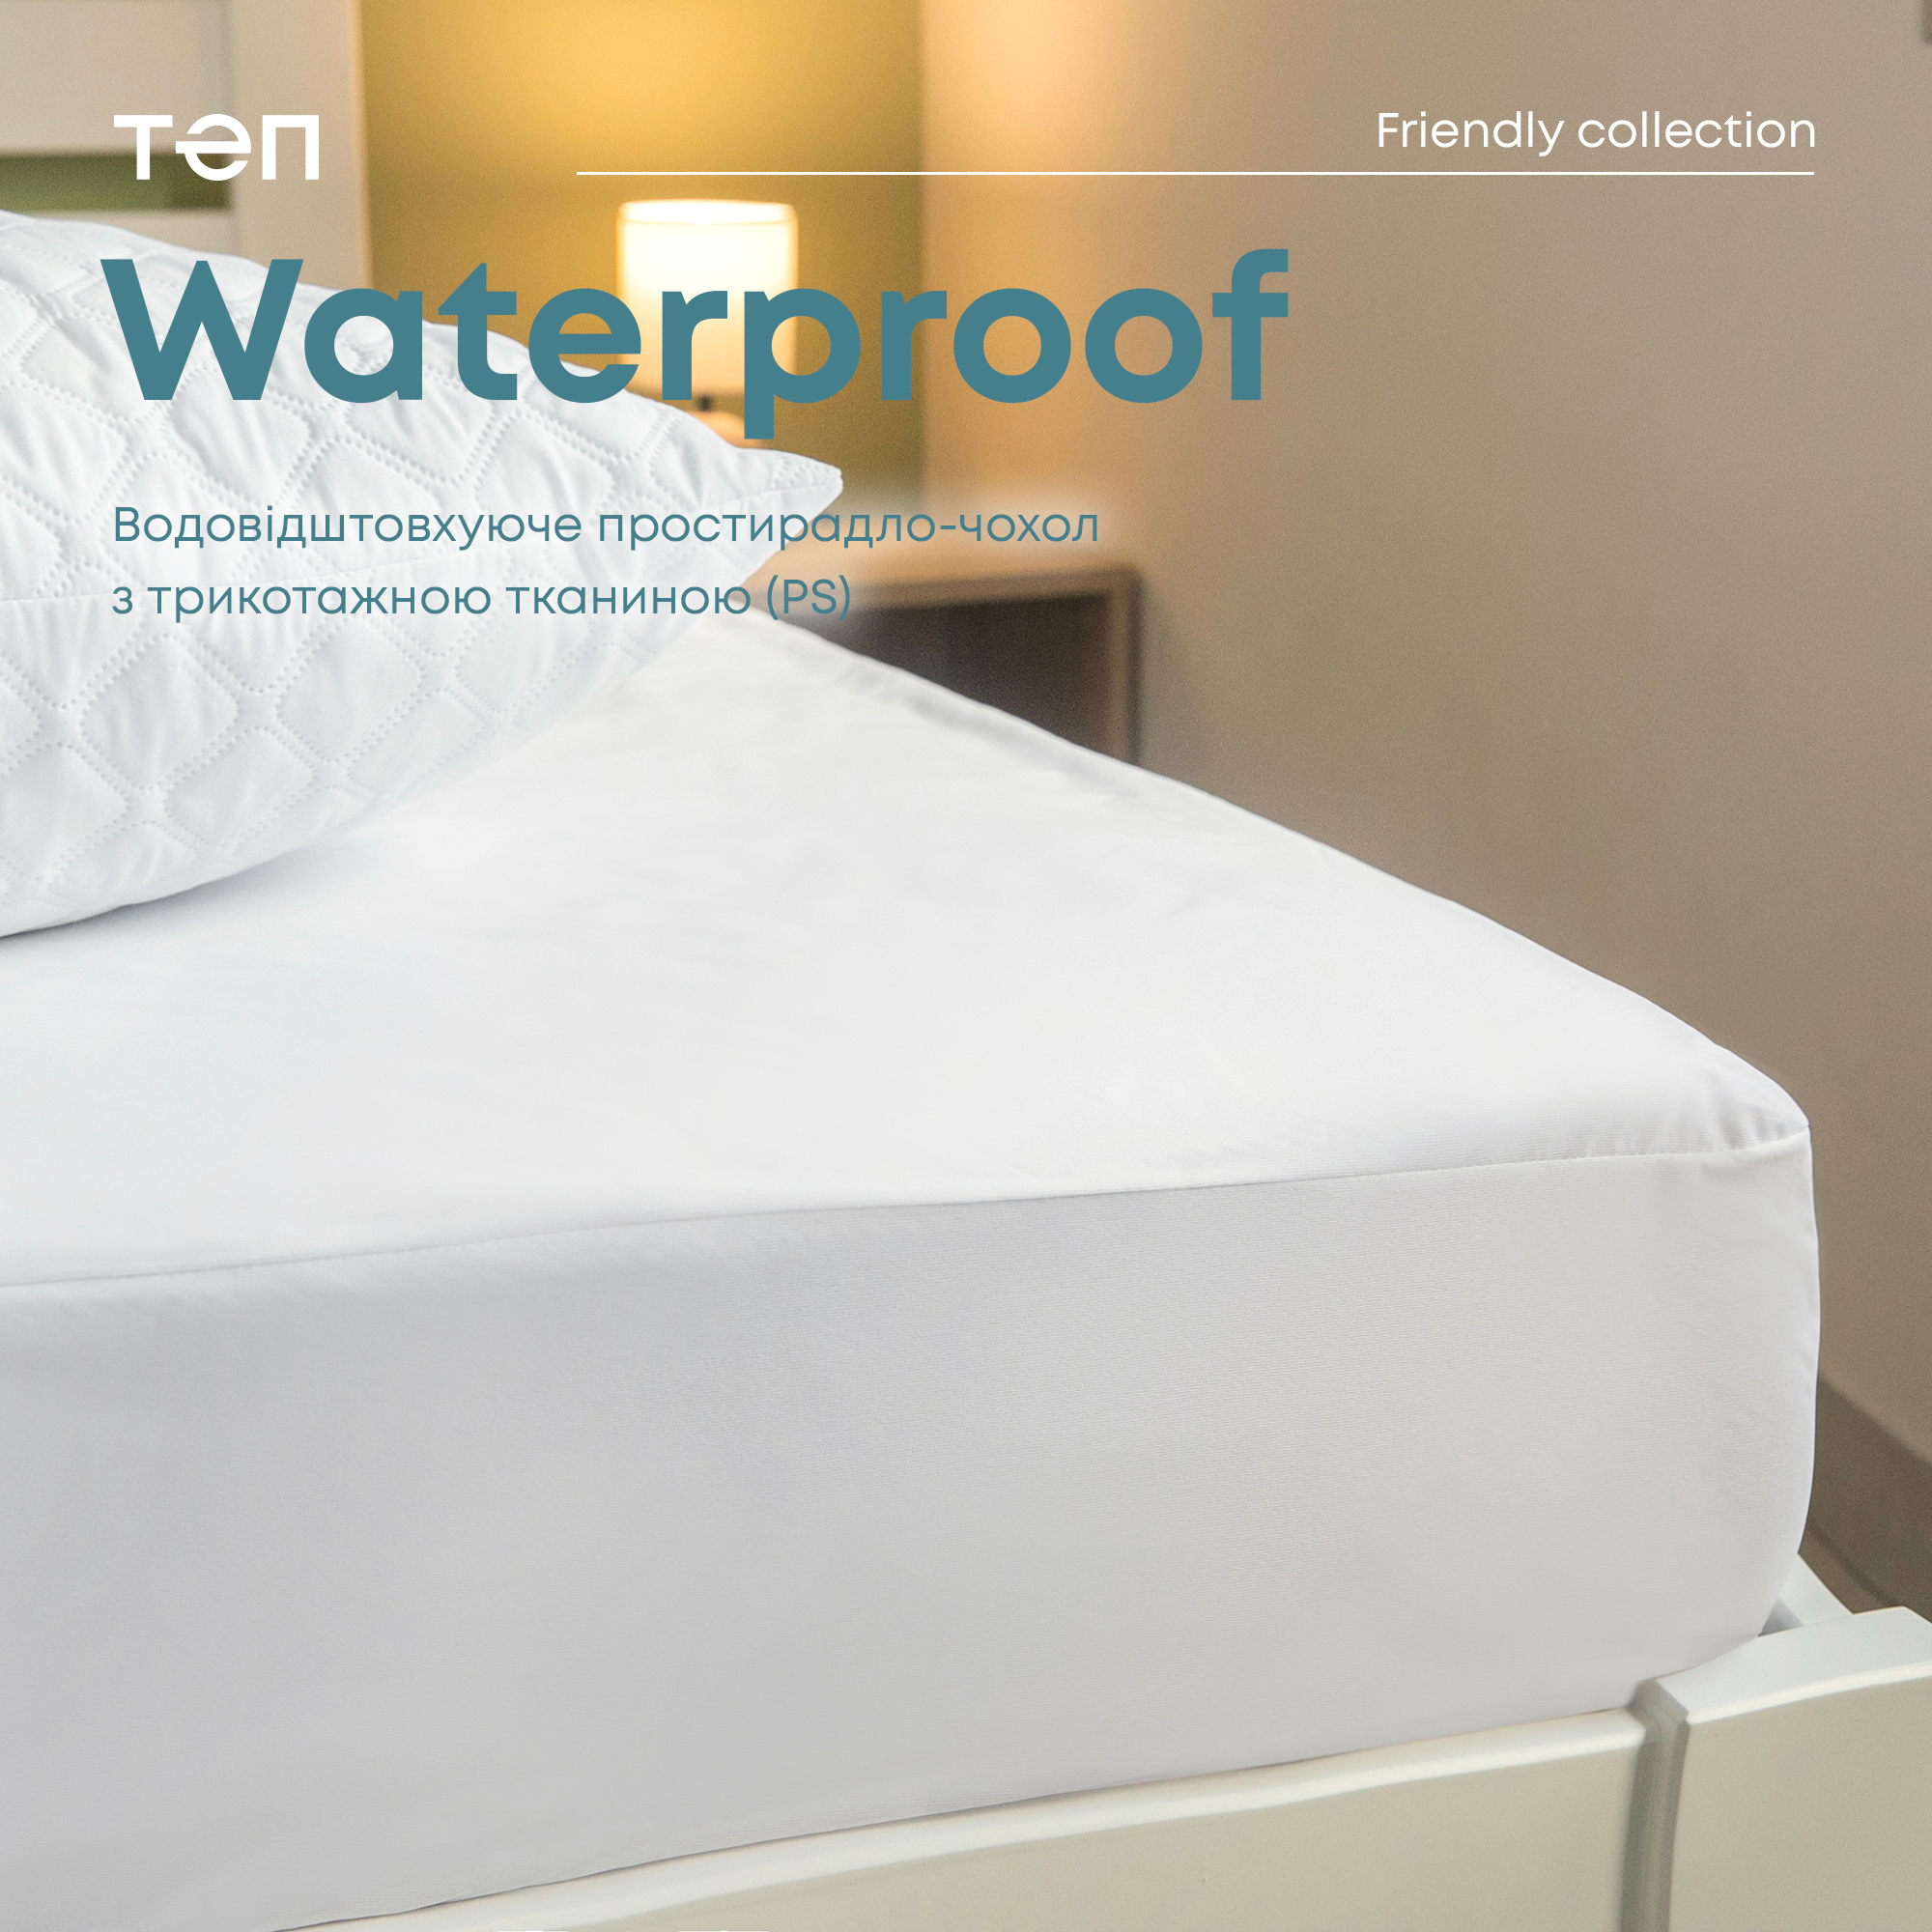 Простыня на резинке ТЕП Waterproof Р.S. водонепроницаемая трикотажная 200х140 см (2-01061_00000) - фото 3